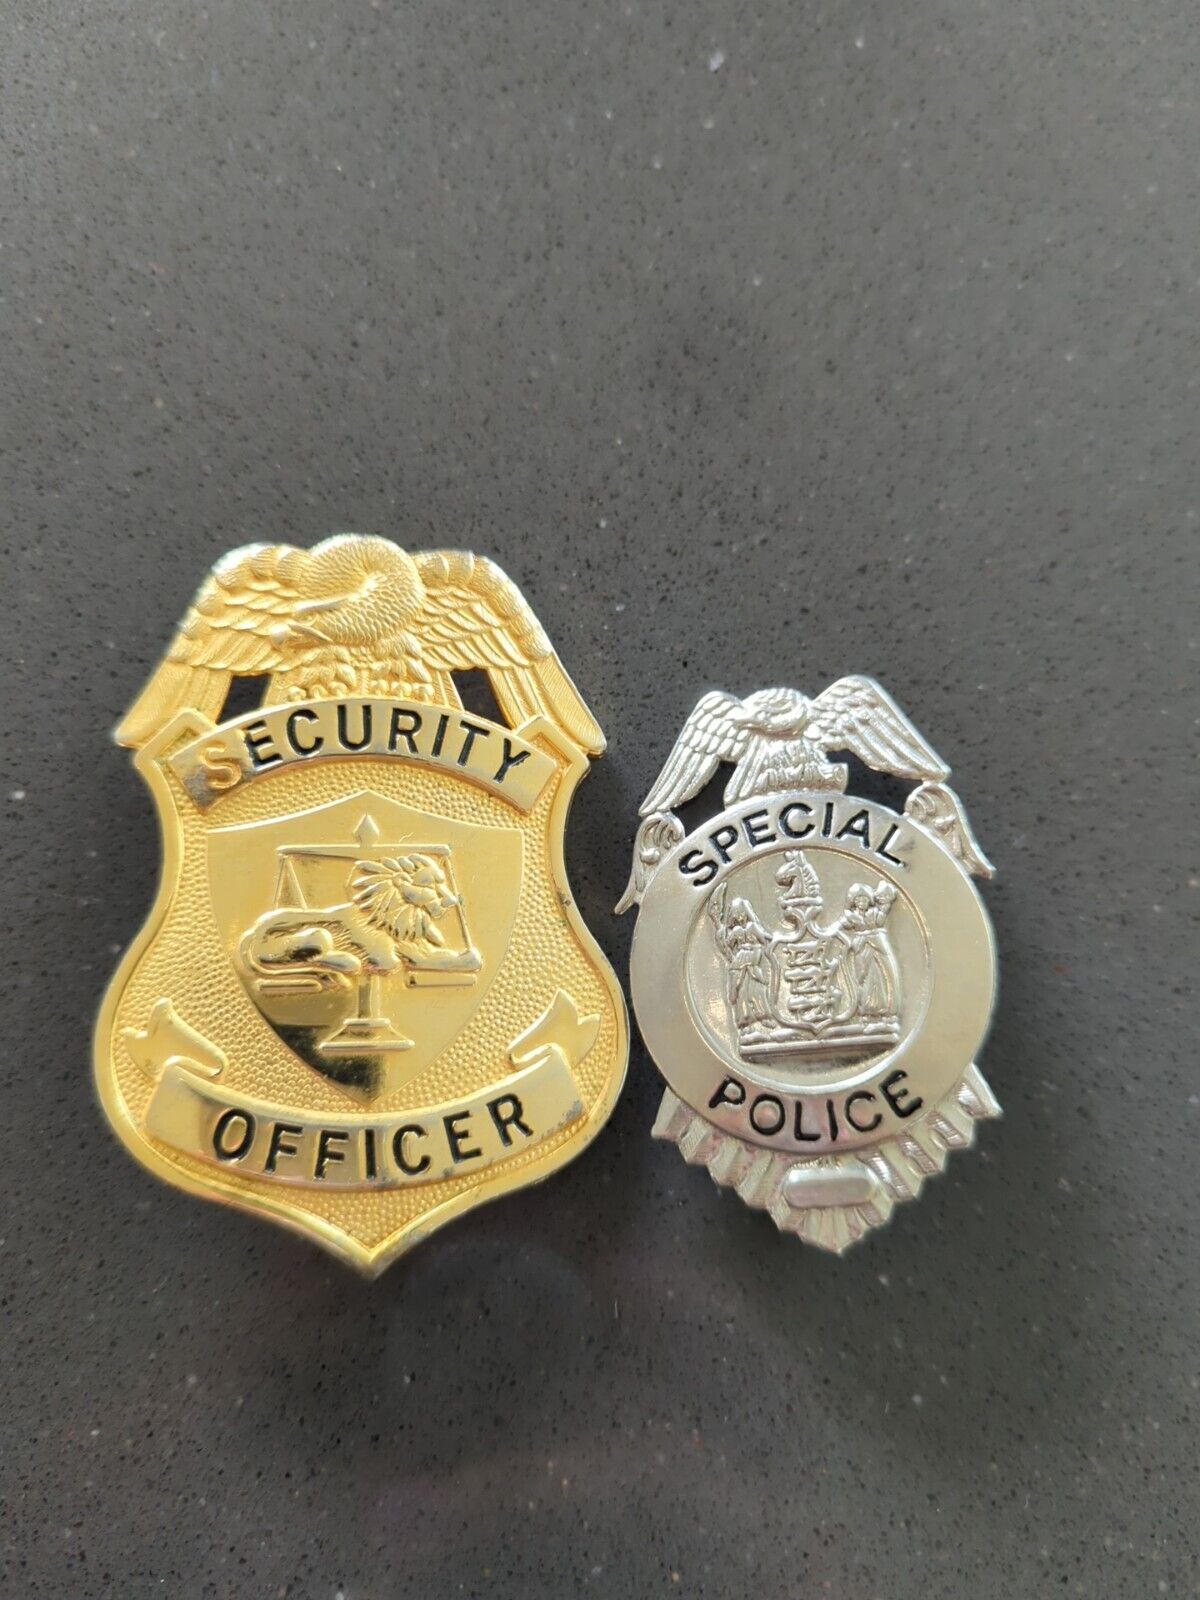 2 Obsolete Special Police Badge Security Officer Badge Gold Silver Vintage C67